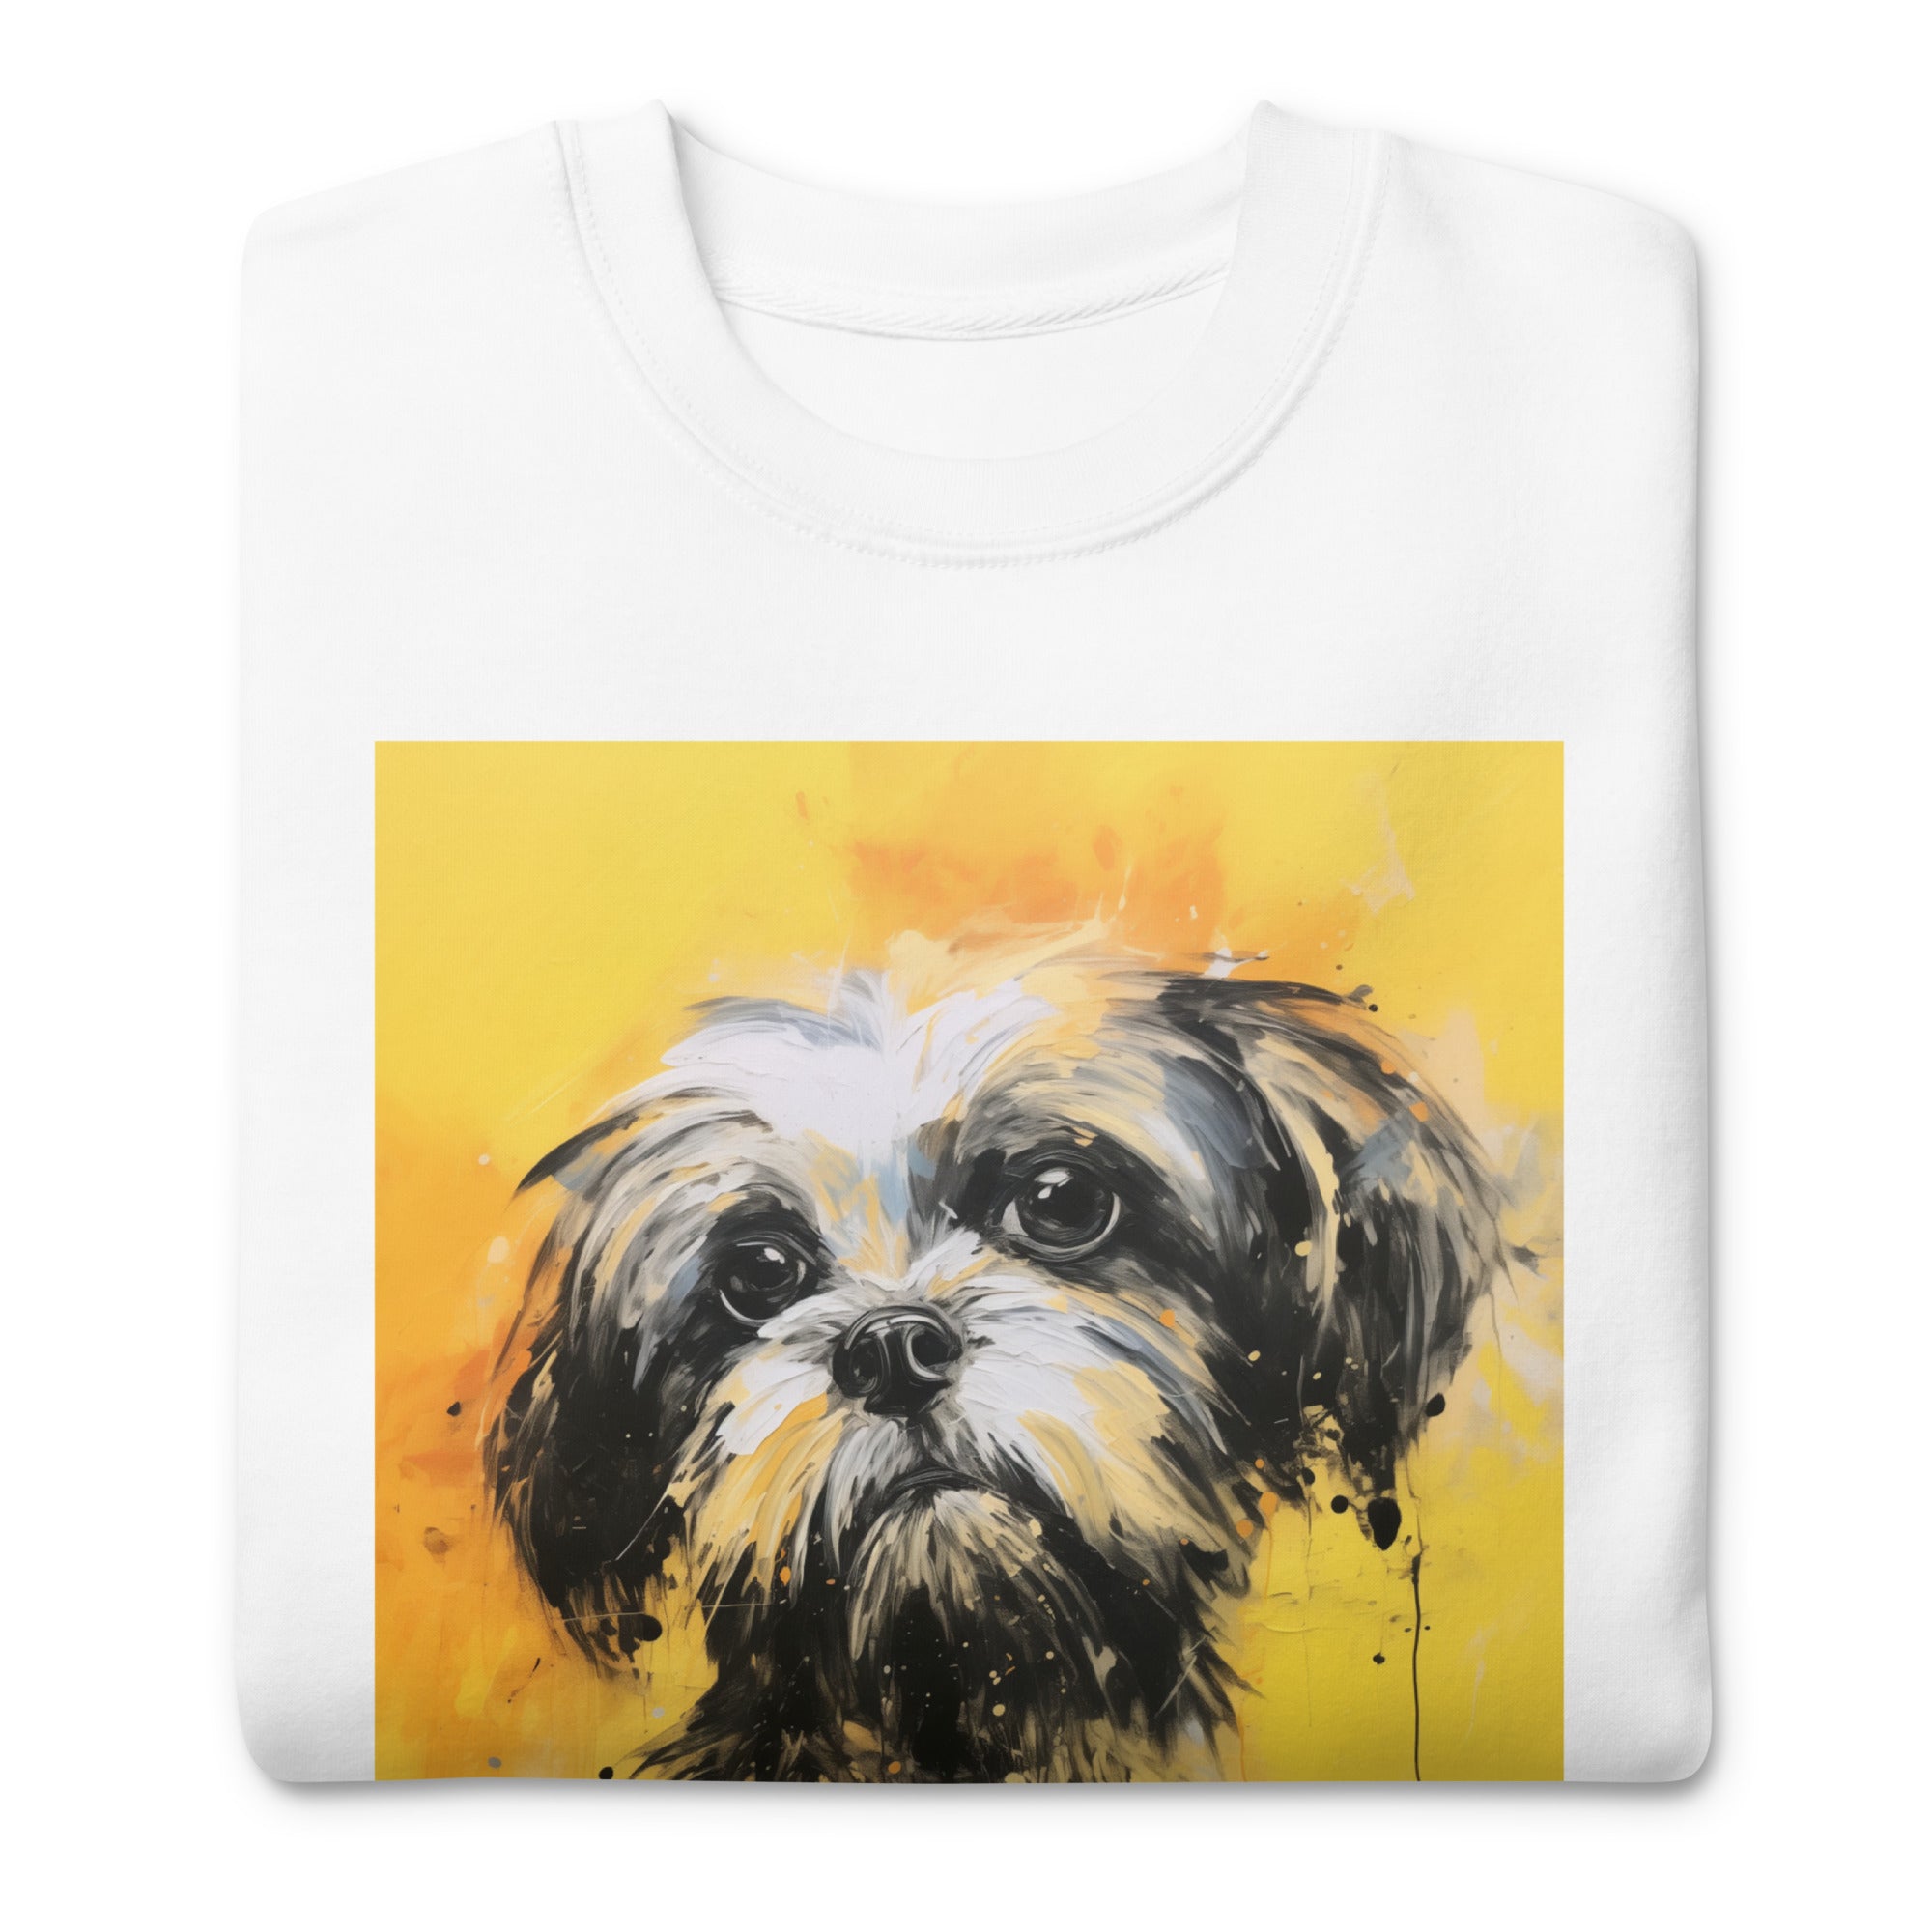 Unisex Premium Sweatshirt - I ❤ DOGS - Shih Tzu